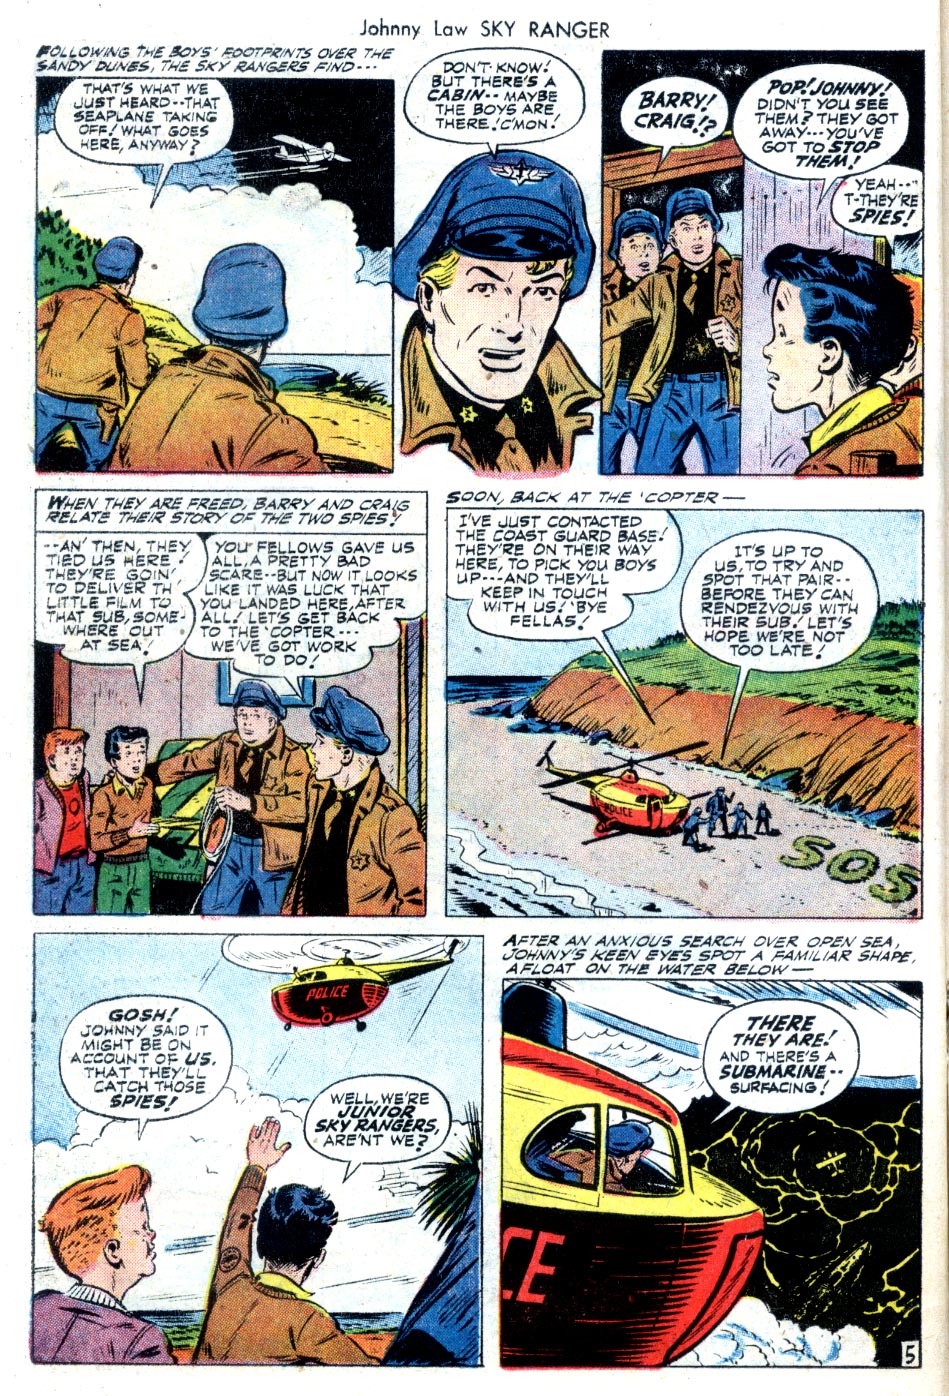 Read online Johnny Law Sky Ranger Adventures comic -  Issue #4 - 16